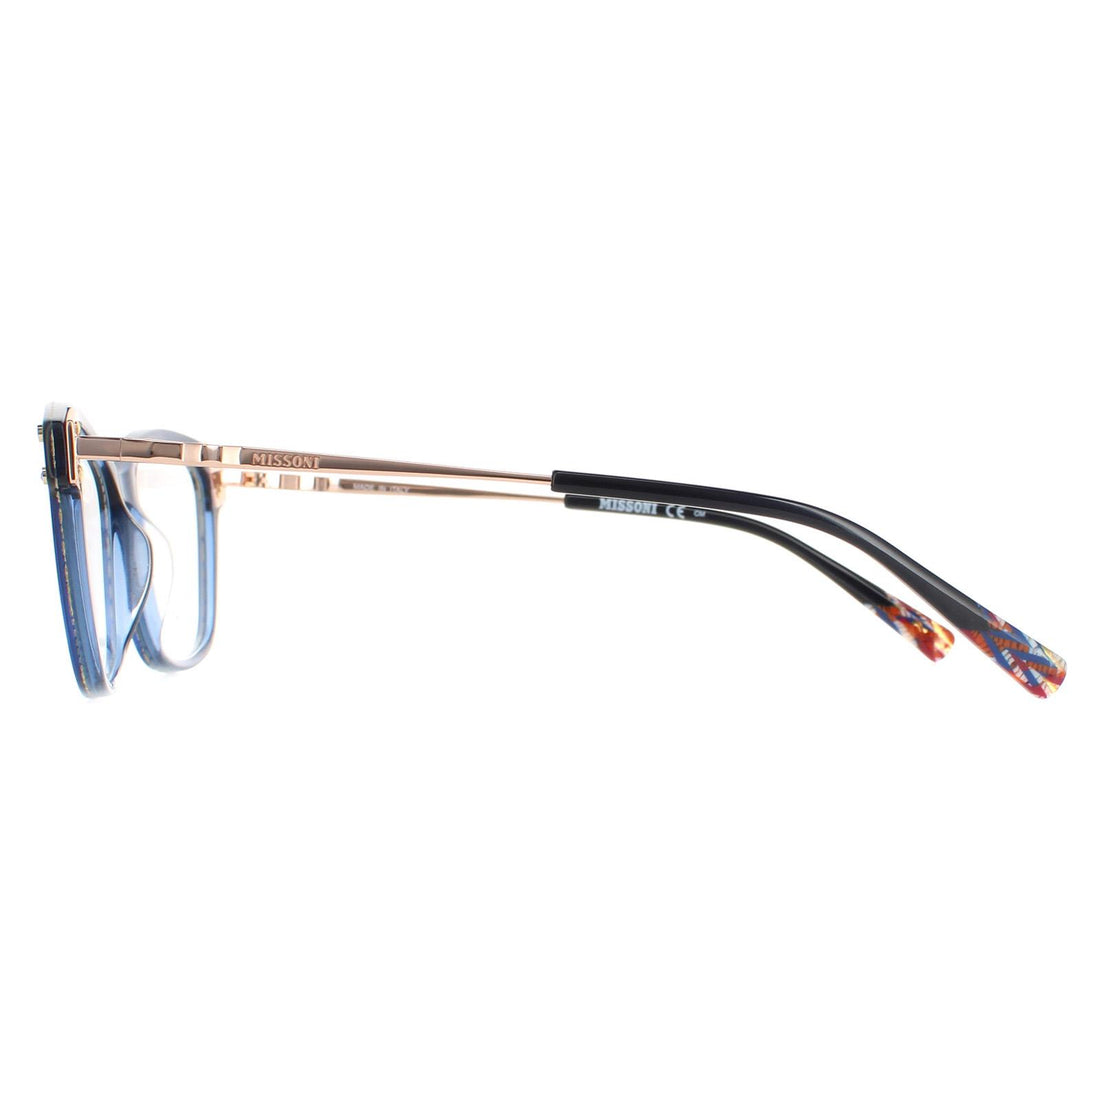 Missoni Glasses Frames MIS 0006 S6F Blue Pattern Women